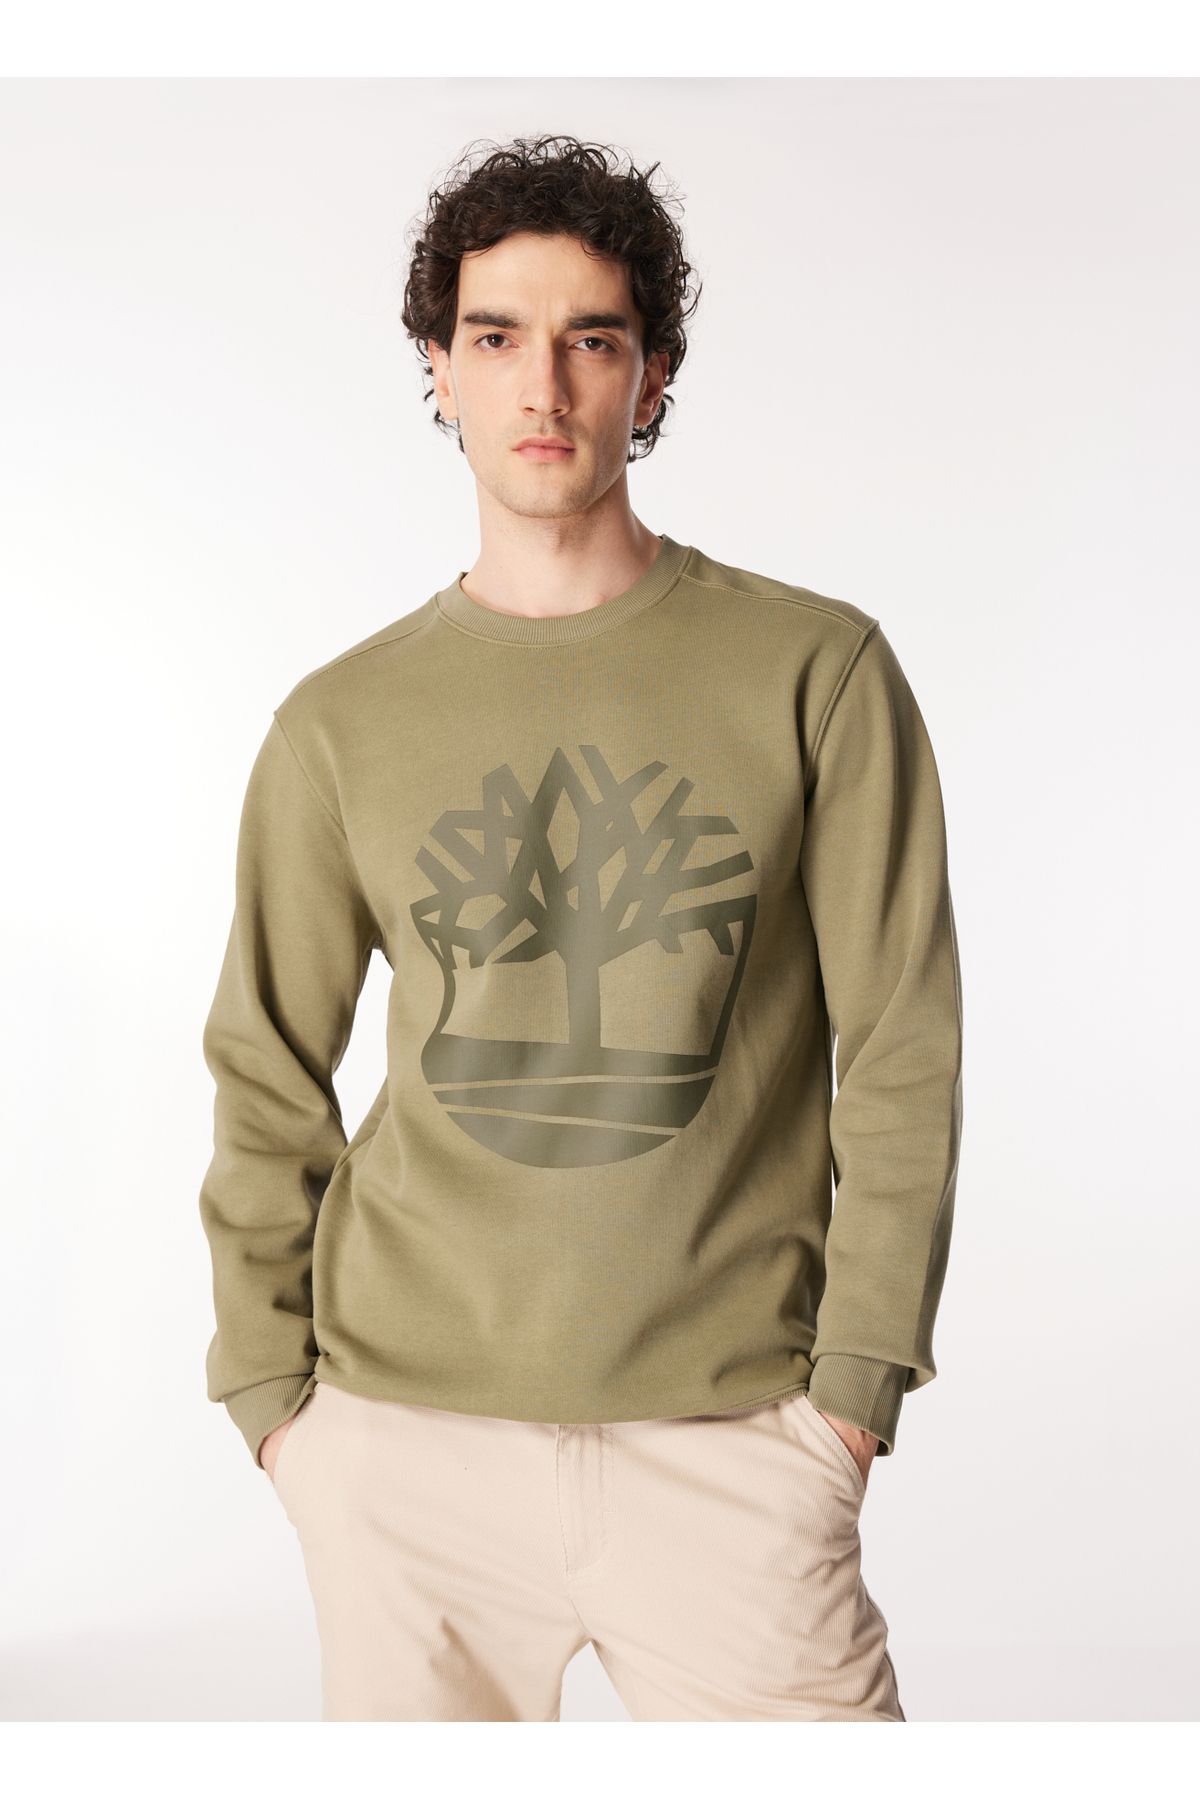 Timberland Sweatshirt, L, Haki